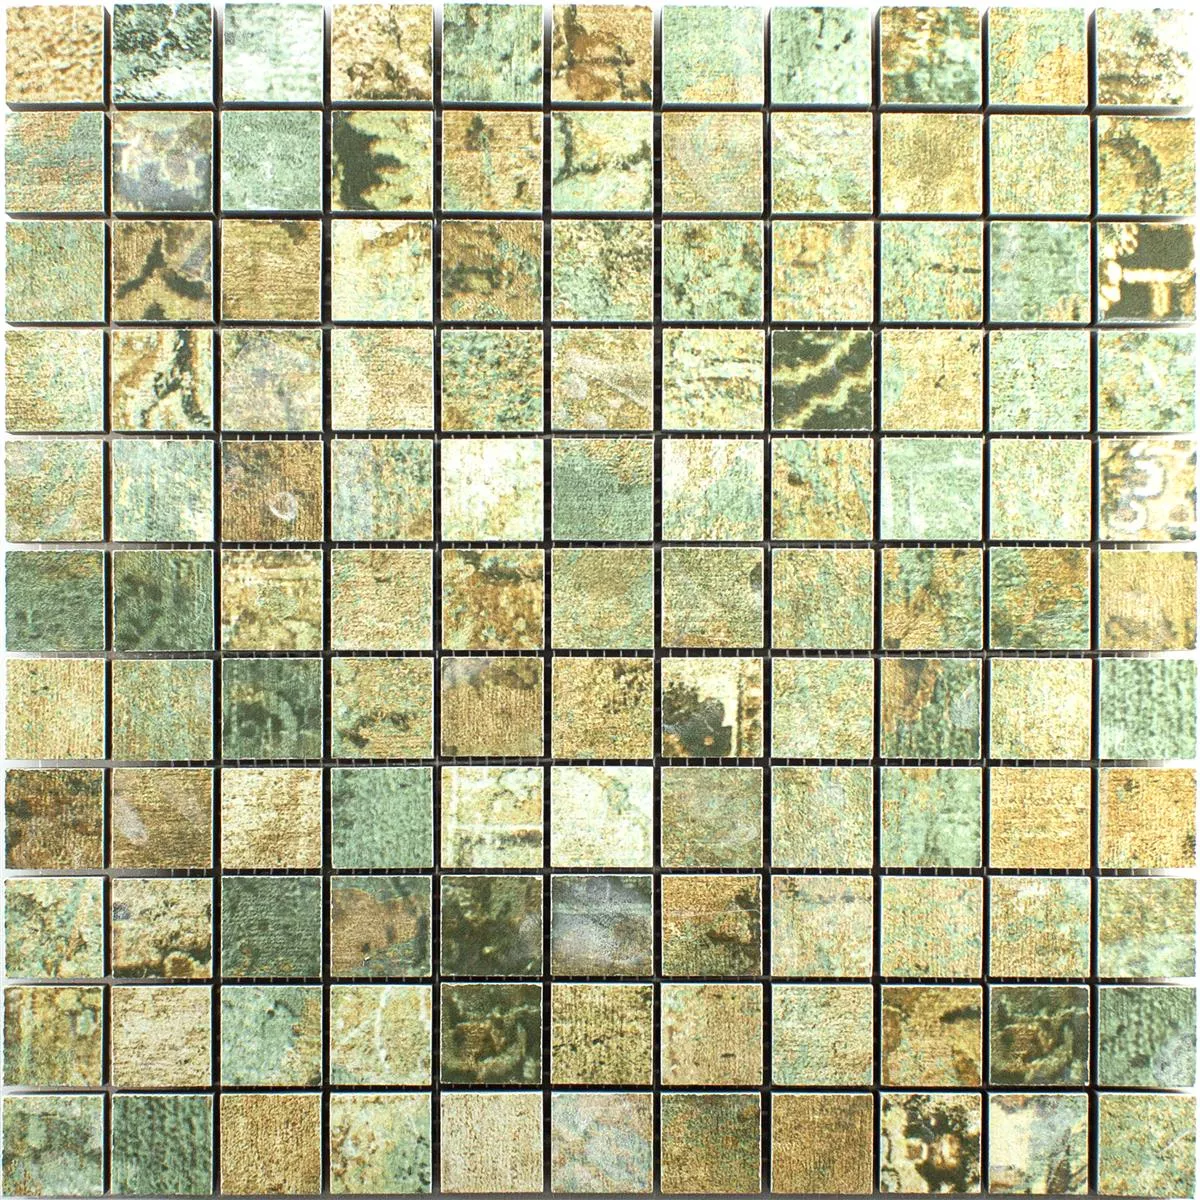 Ceramic Mosaic Tiles Moonlight Brown Green 25x25mm